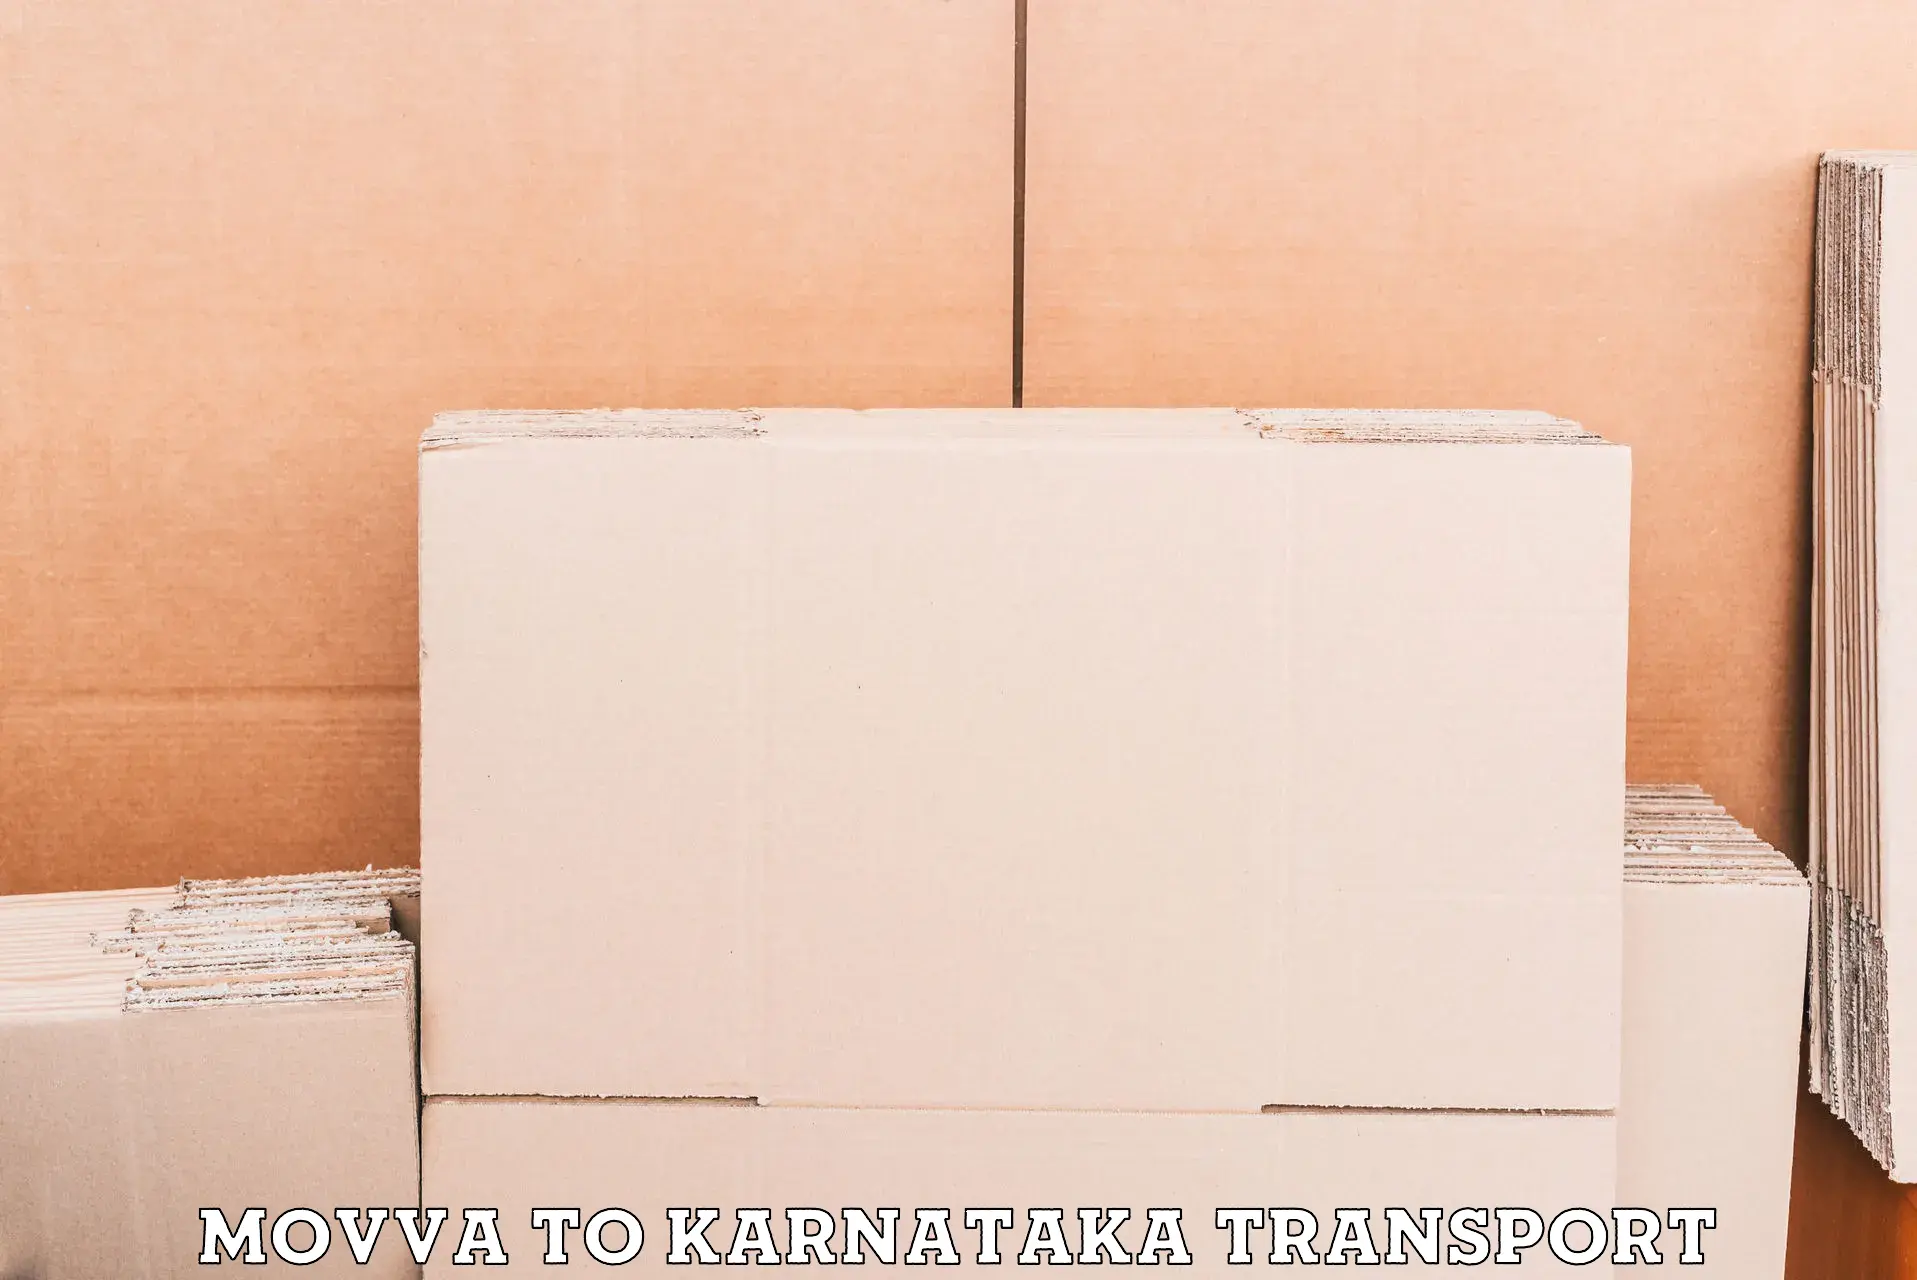 Container transport service Movva to Hosanagar